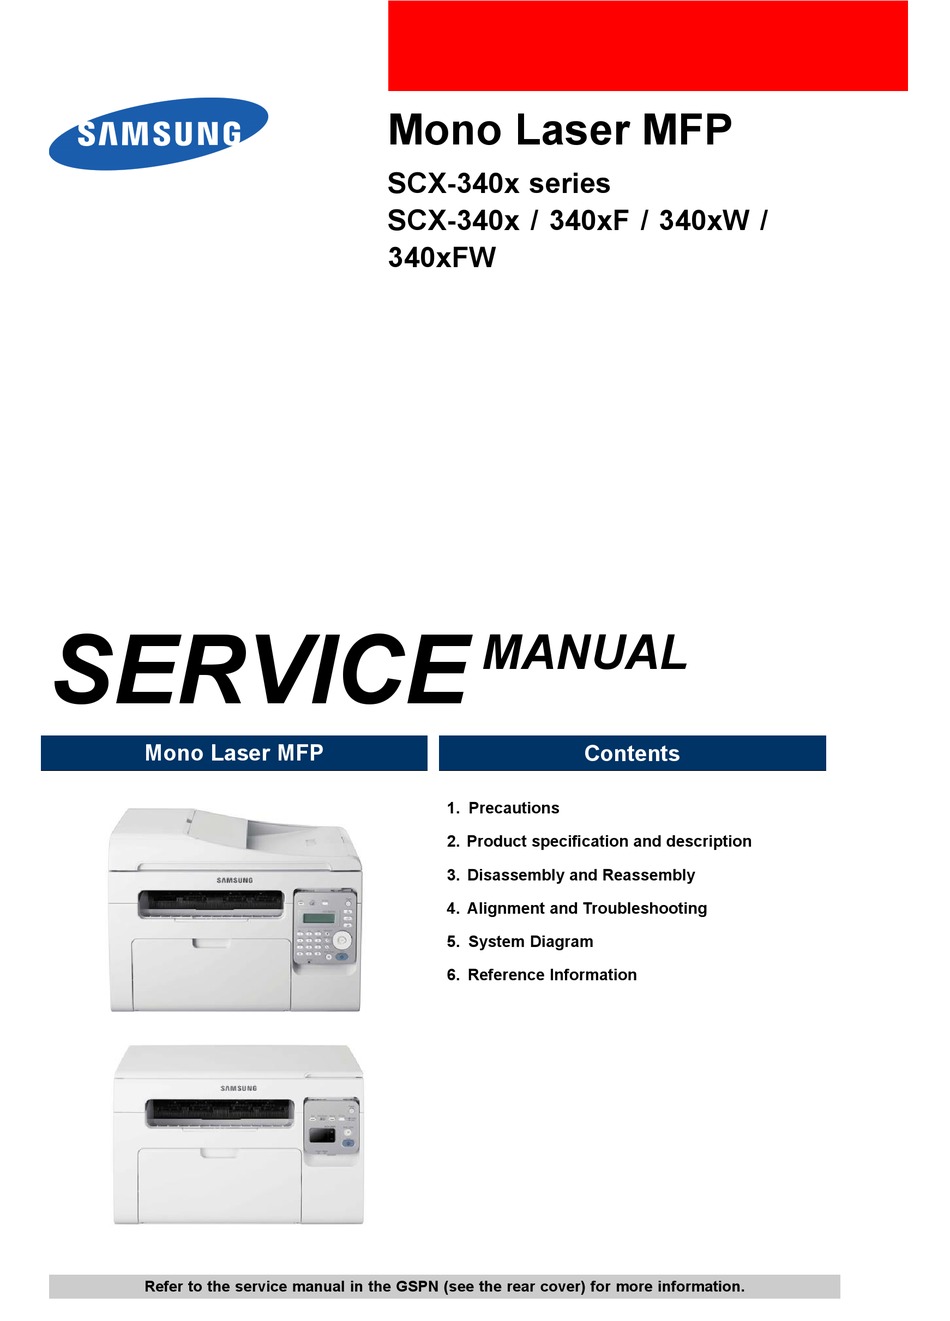 Samsung Scx 3400 Service Manual